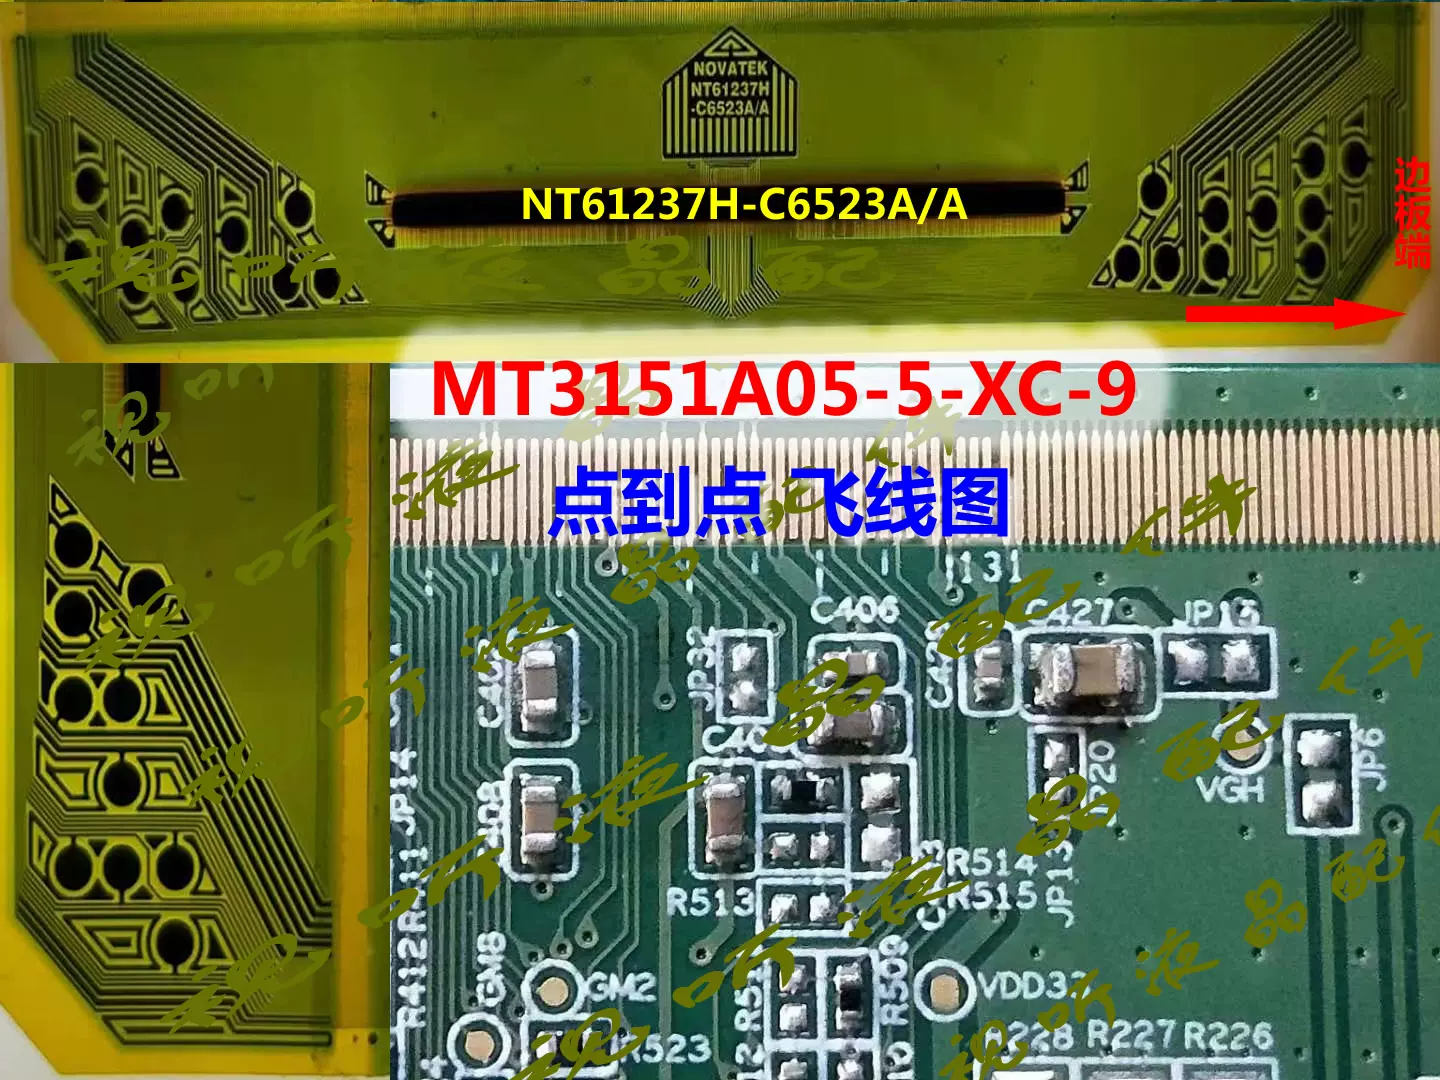 NT61237H-C6523A/A飞线图点位图边板ST3151A05-8-XC-3支持全飞图